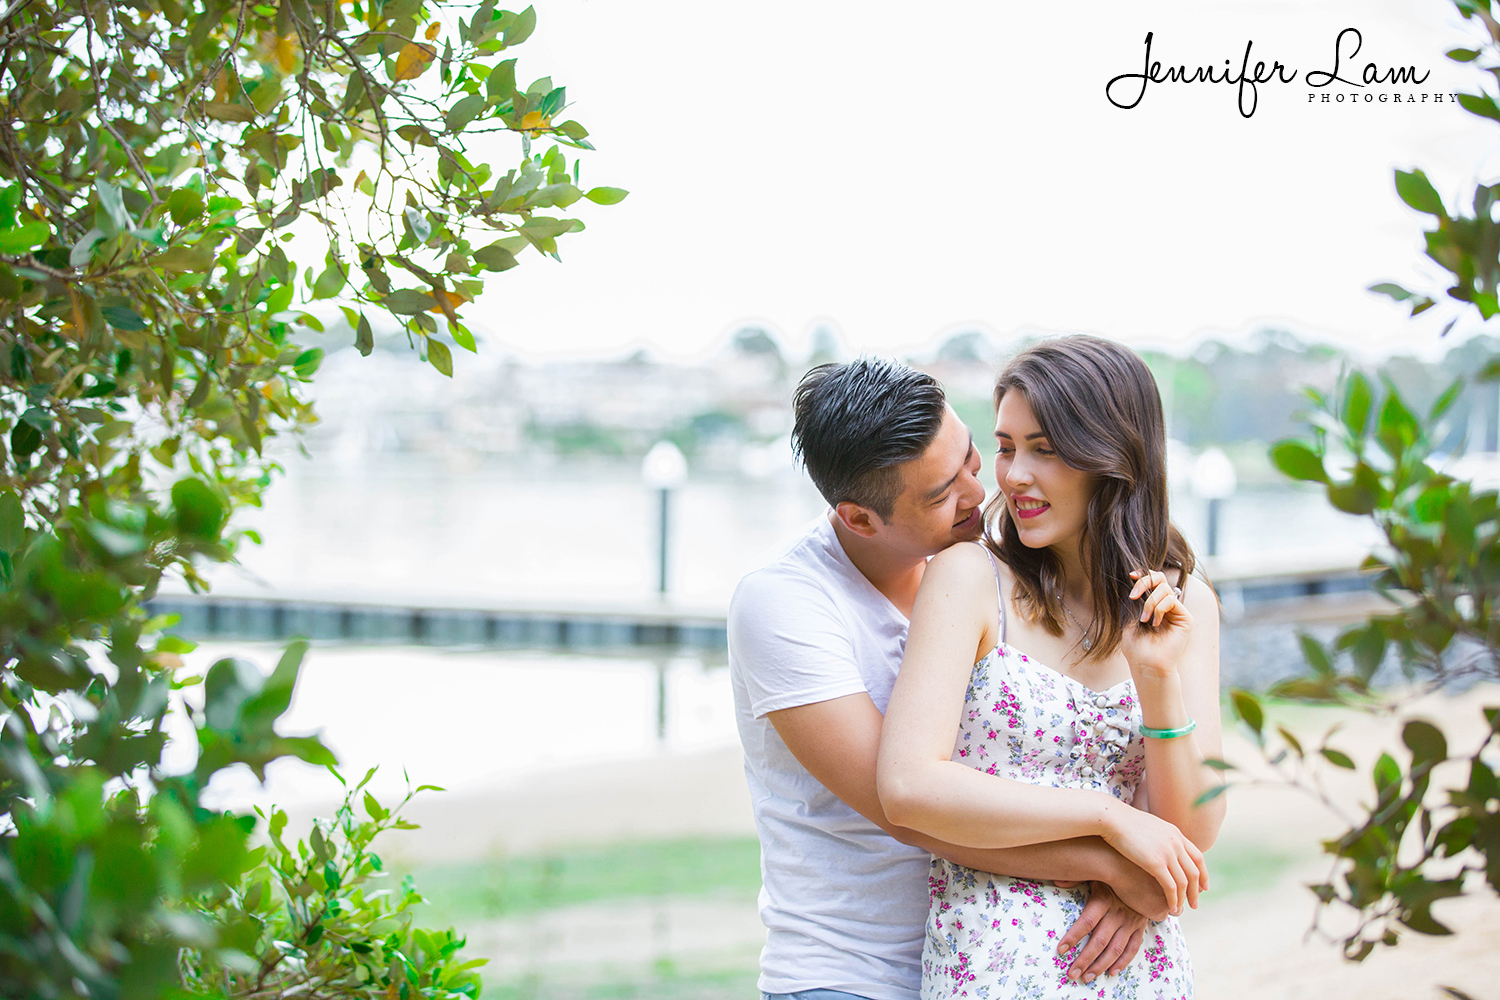 Sydney Pre-Wedding Photography - Jennifer Lam Photography (18).jpg